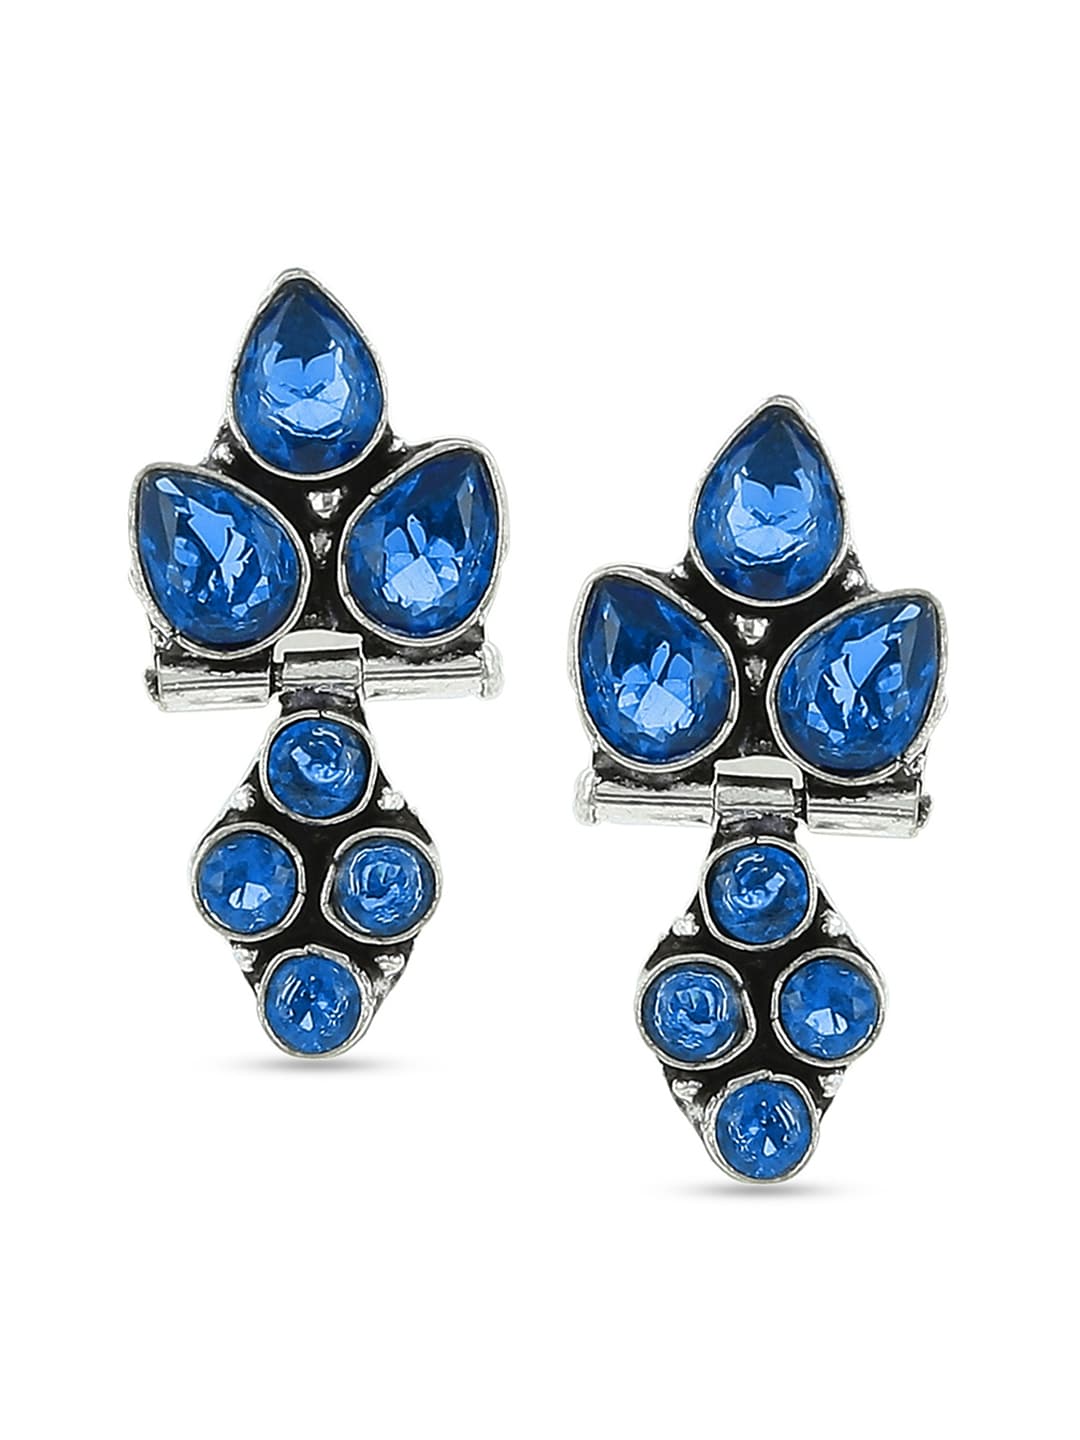 EL REGALO Blue Leaf Shaped Drop Earrings - for Women and Girls
Style ID: 17119262